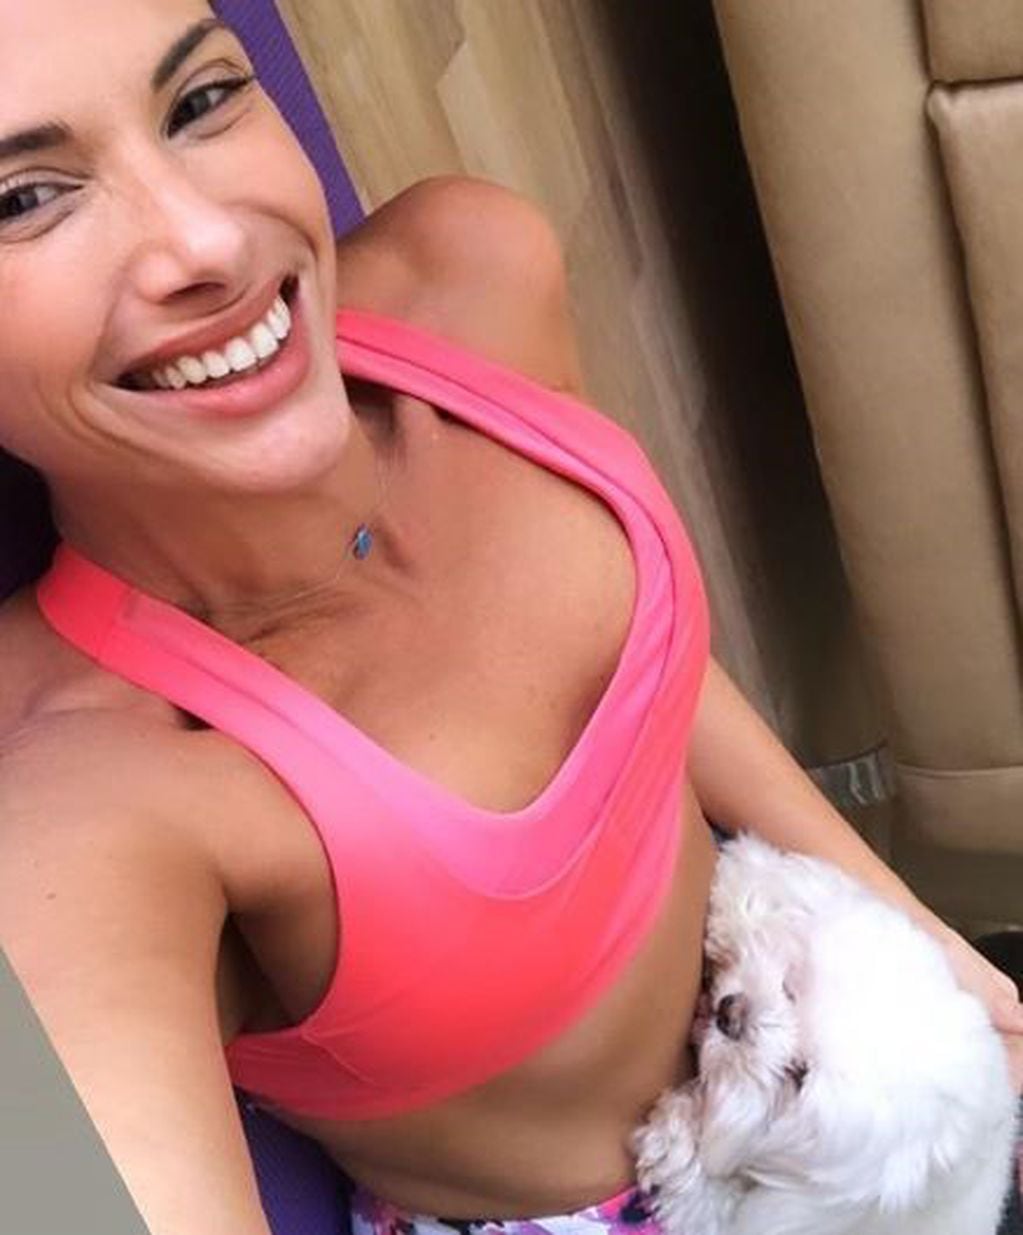 Alessandra Rampolla junto a su perrita. Instagram/alessarampolla